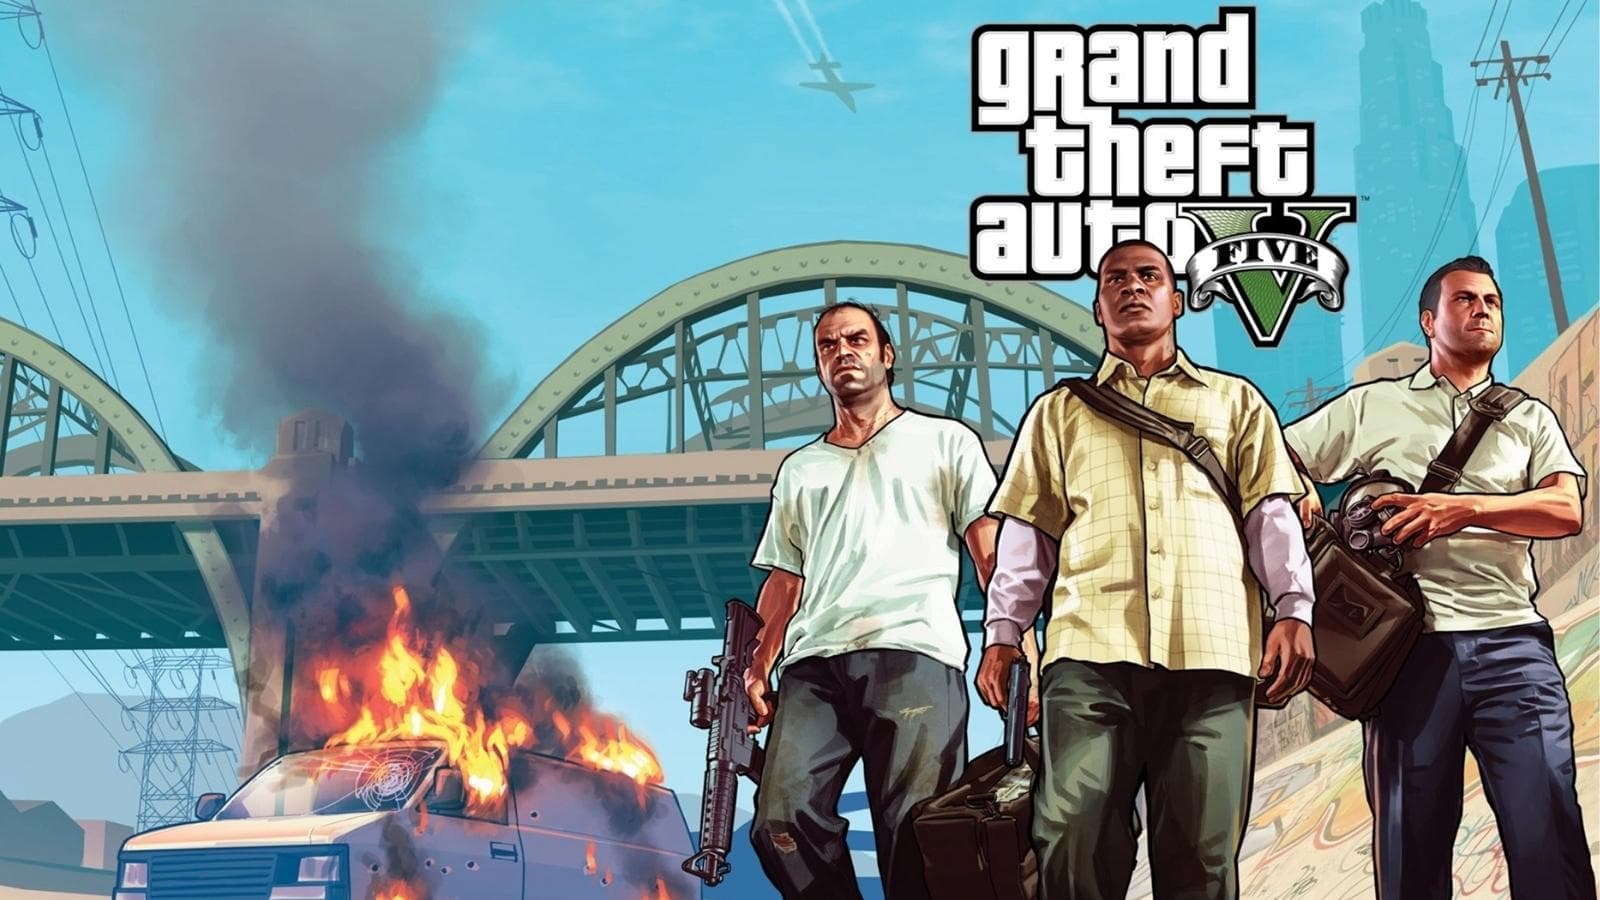 Videojuegos metaverso Grand Theft Auto 5